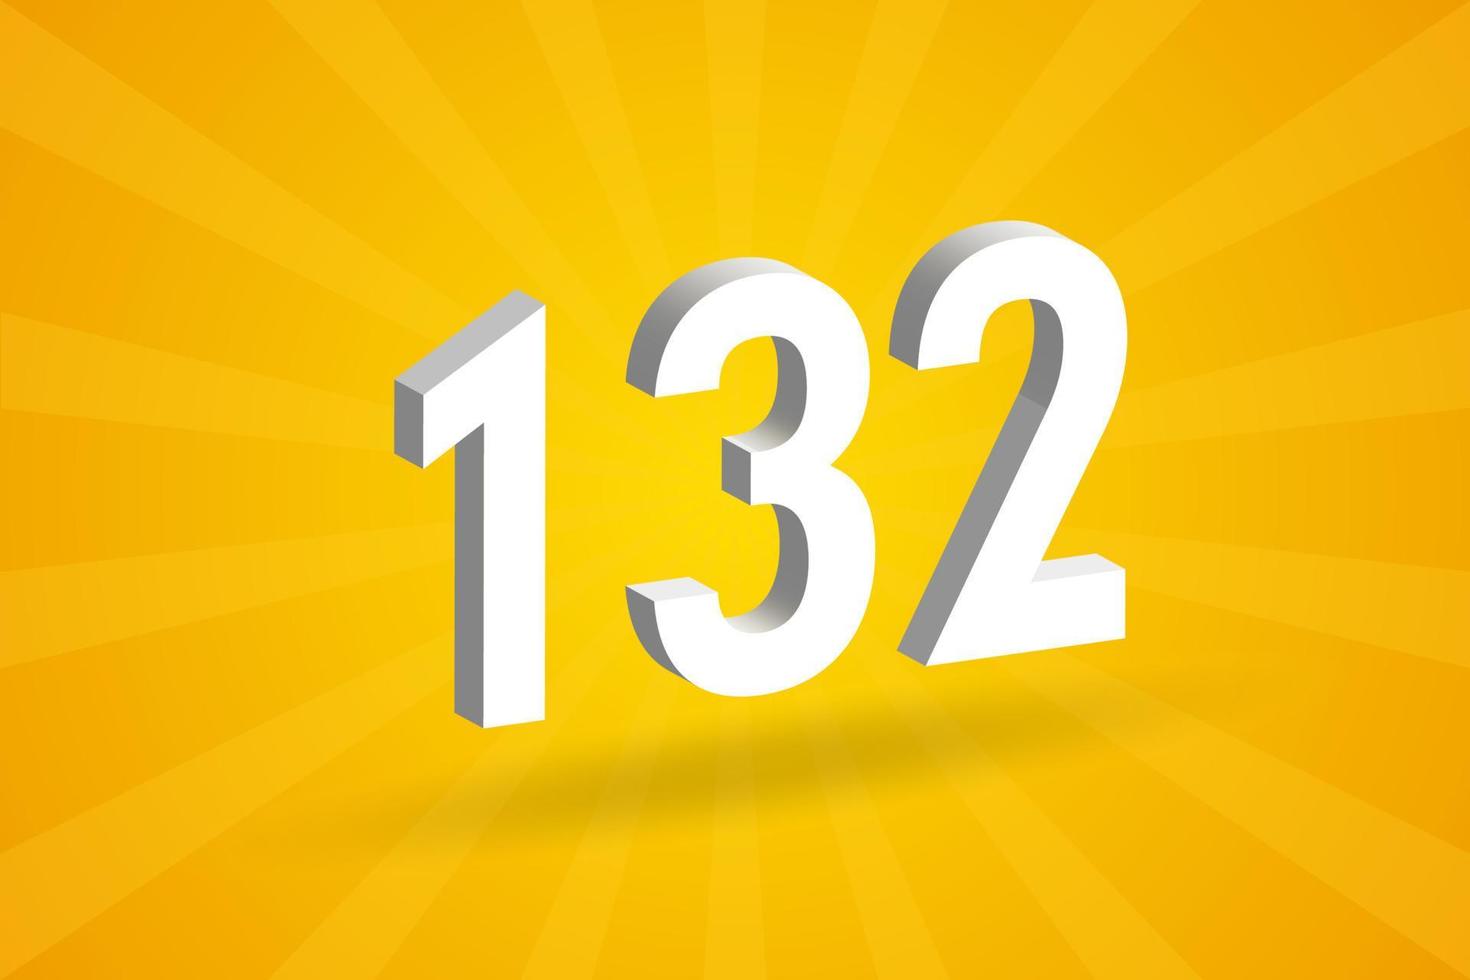 3d 132 siffra font alfabet. vit 3d siffra 132 med gul bakgrund vektor